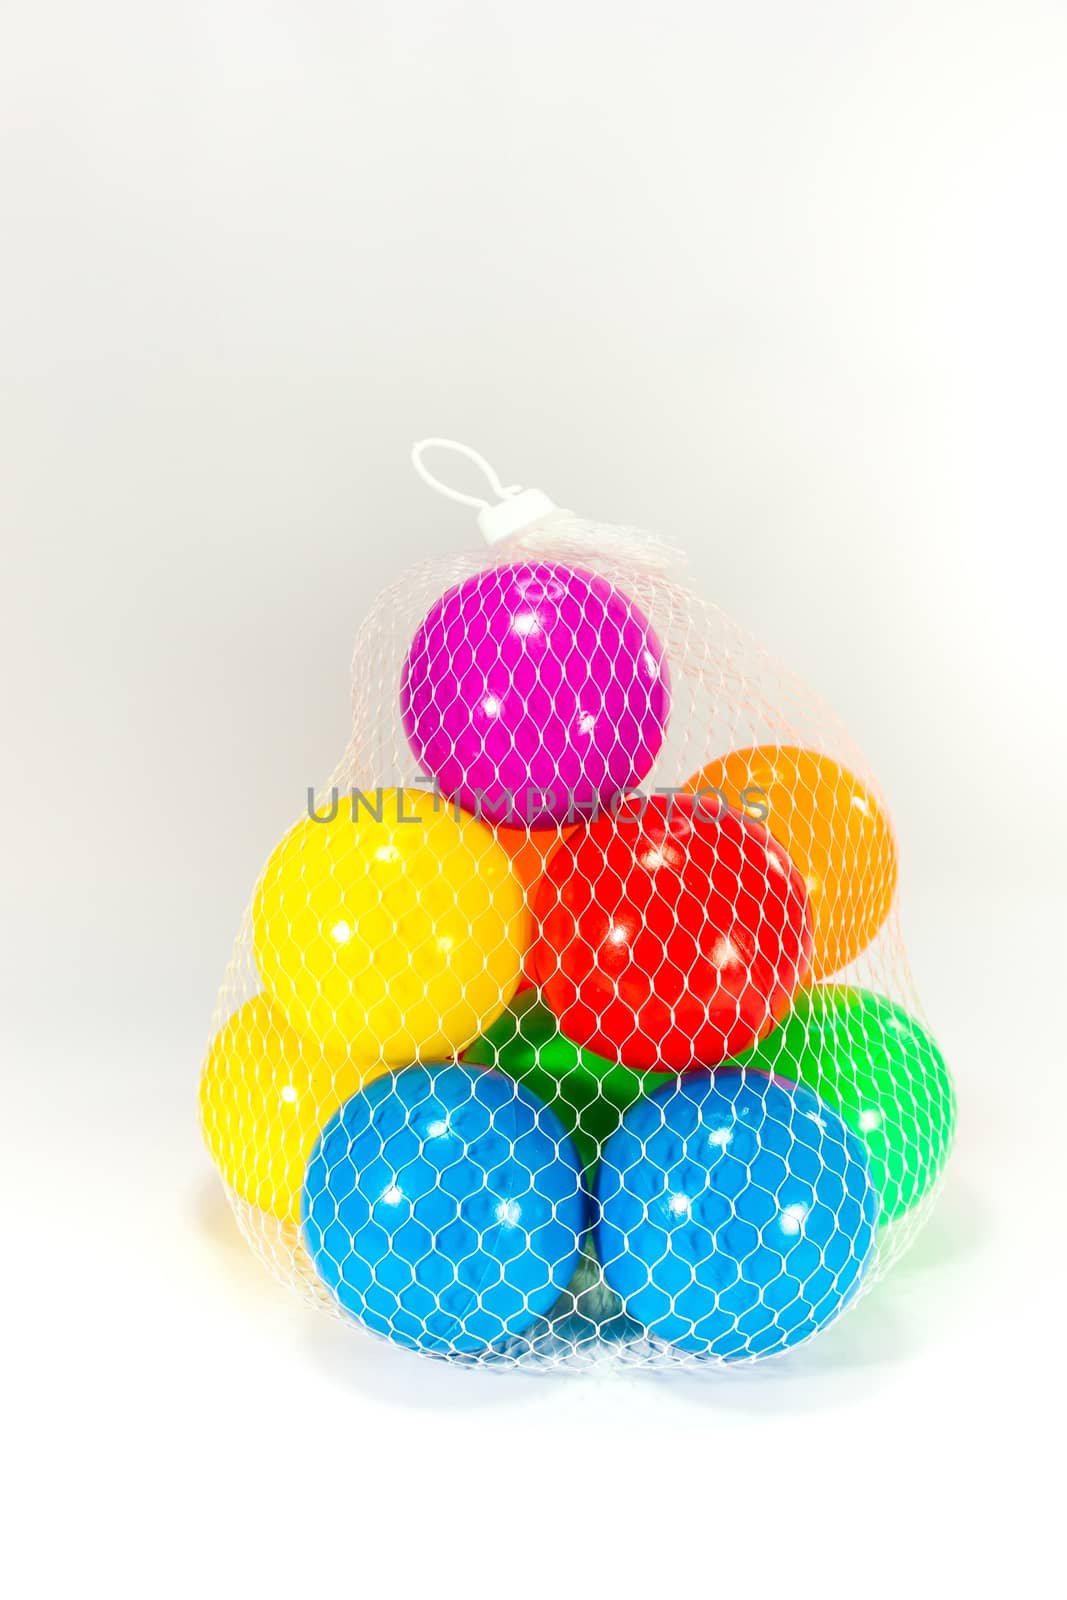 colorful ball by nattapatt